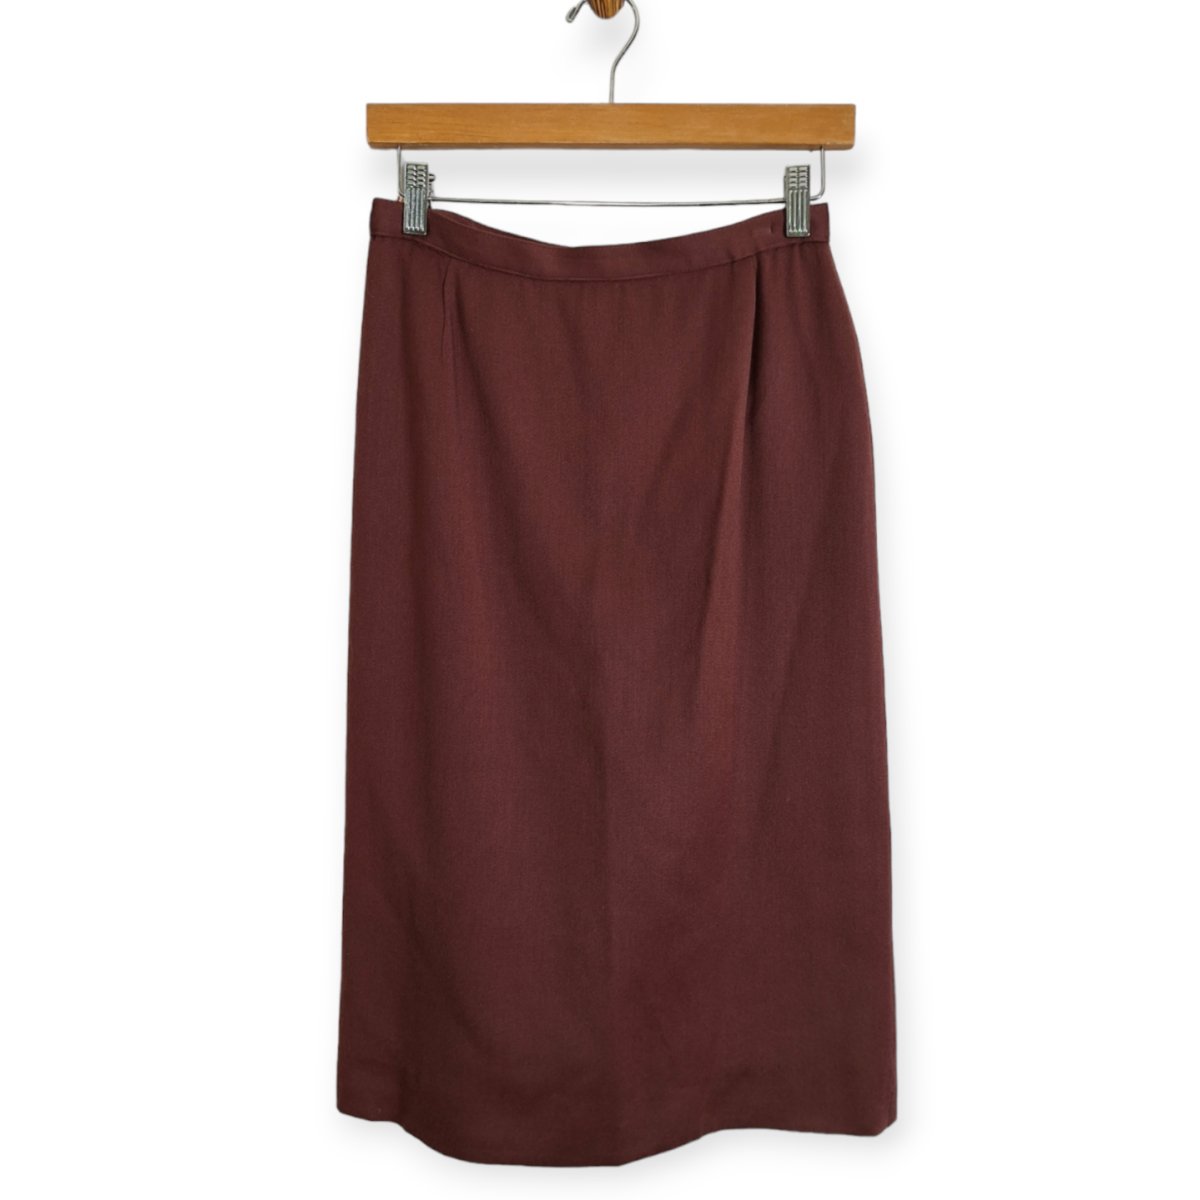 Vintage 70s Peak Lapel 3 Piece Midi Skirt Suit Size Women's S/M 4/6 - themallvintage The Mall Vintage